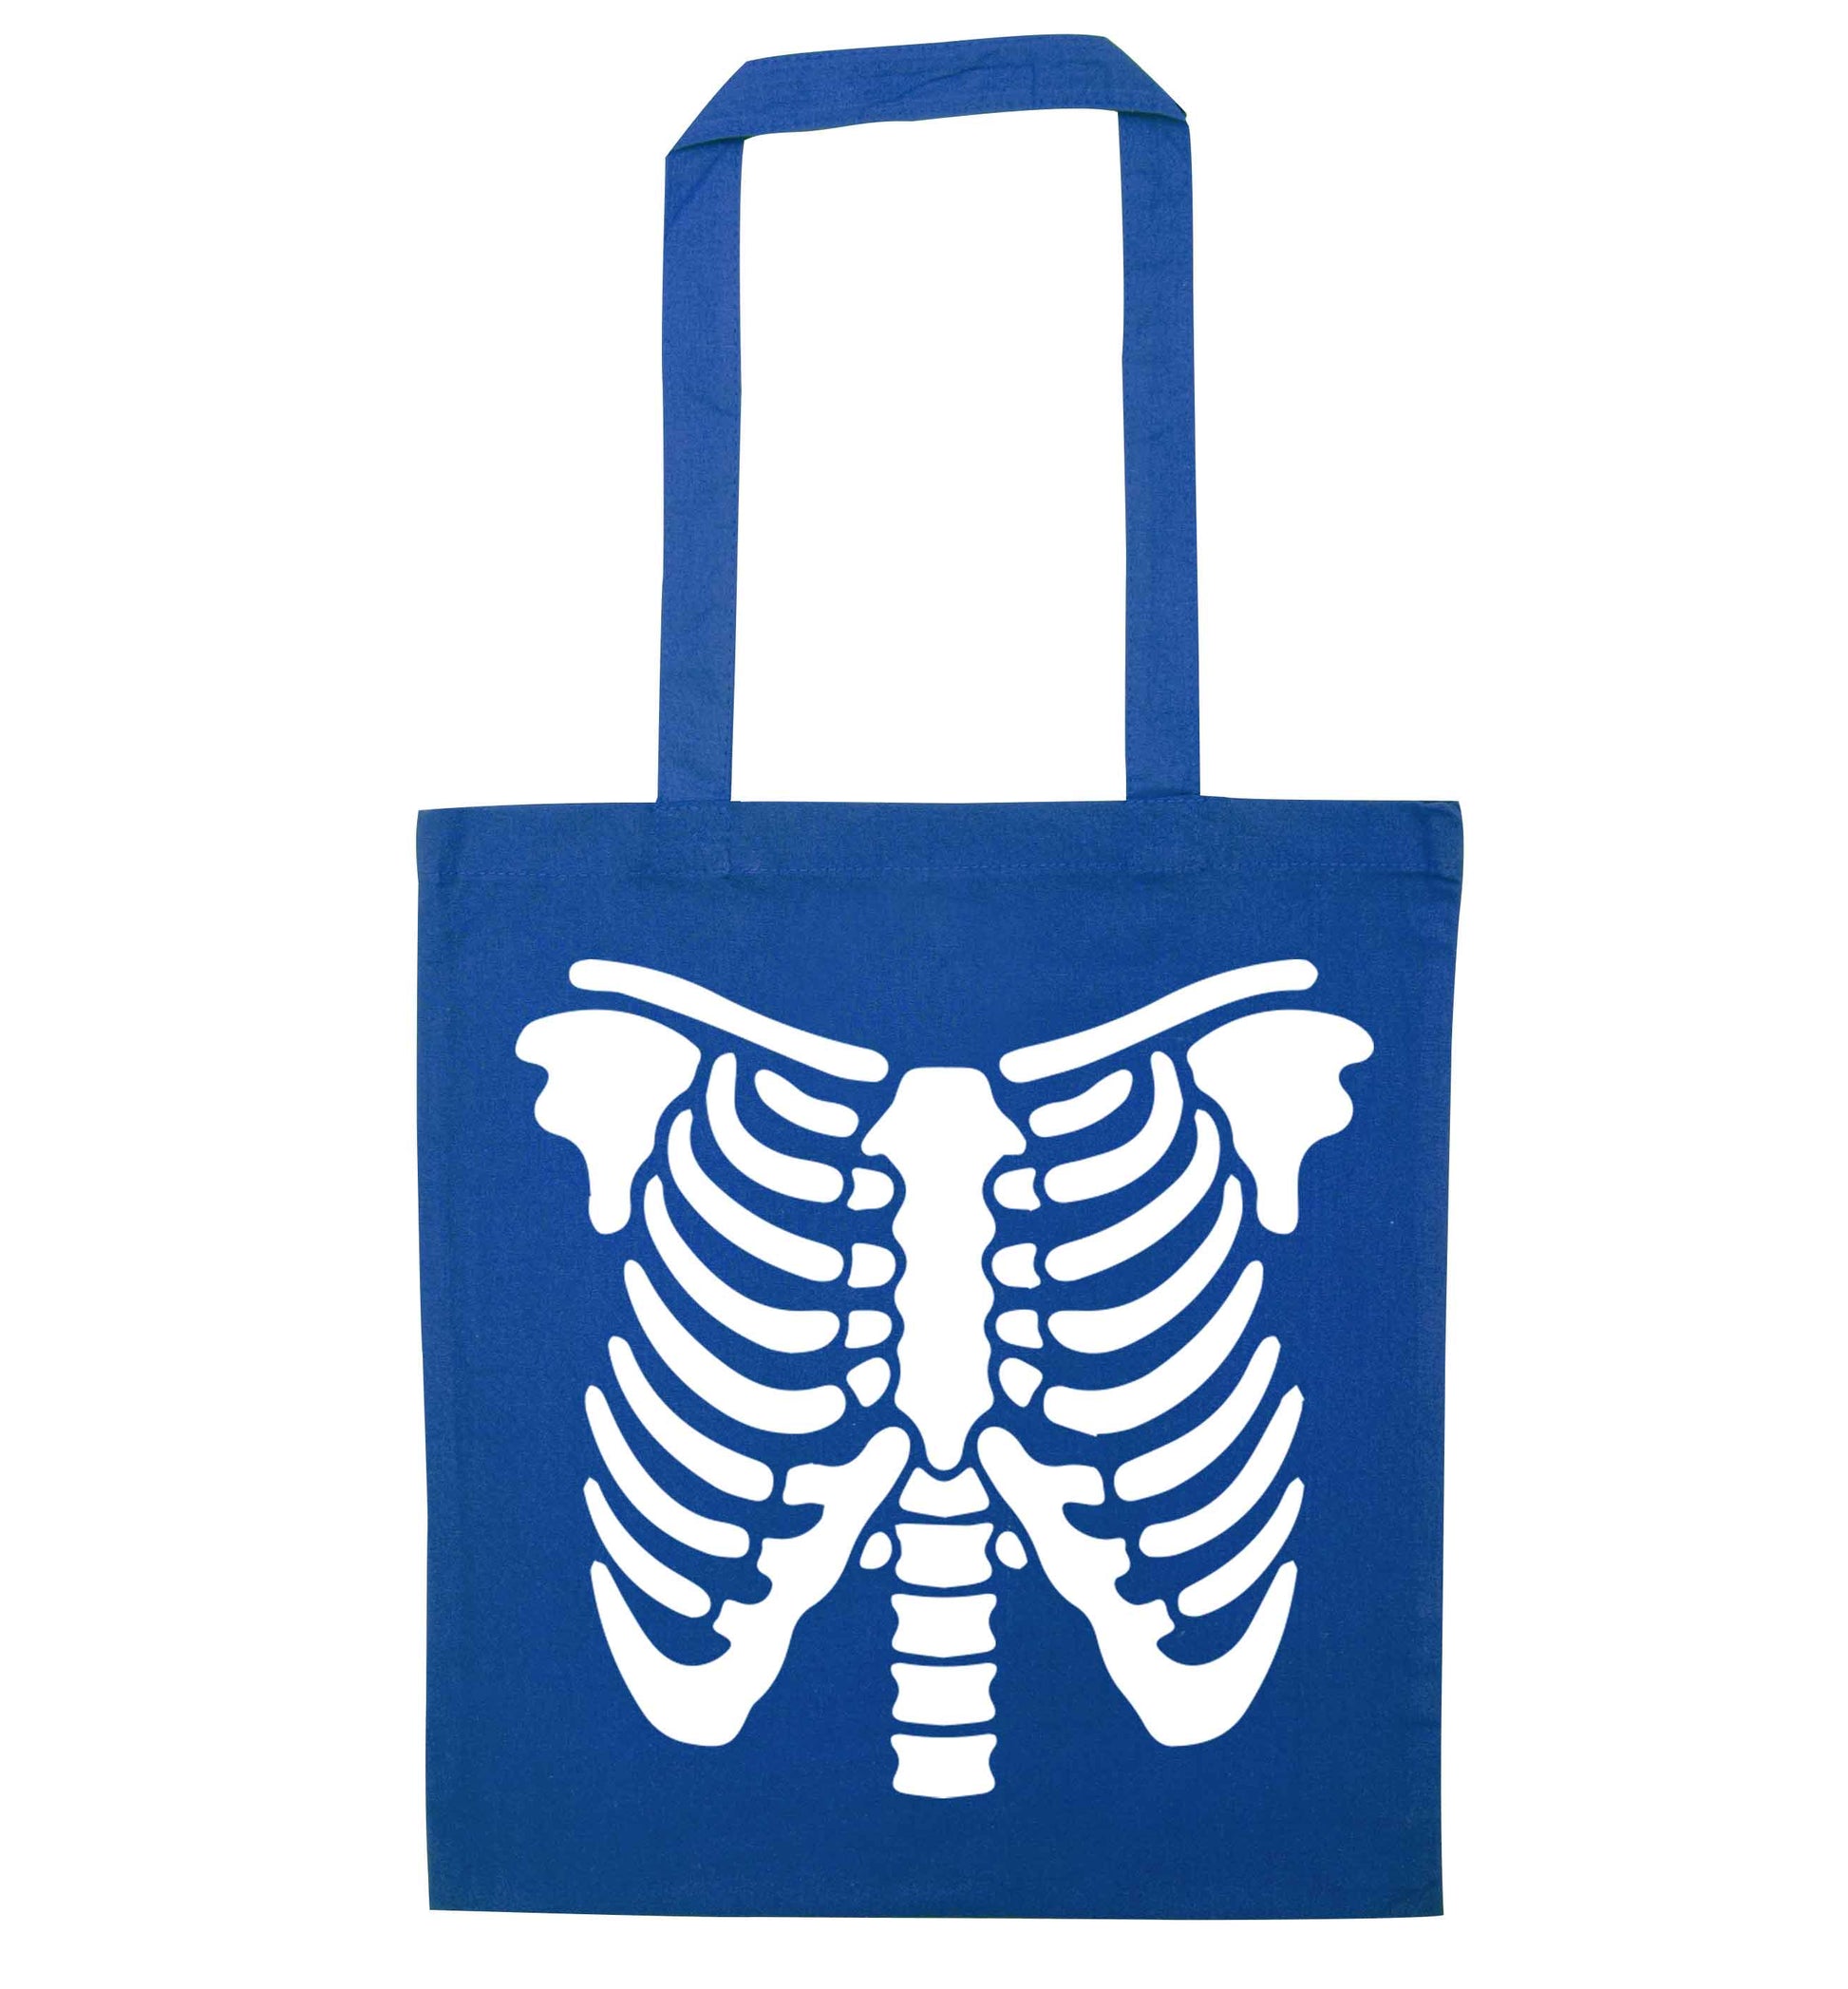 Skeleton ribcage blue tote bag